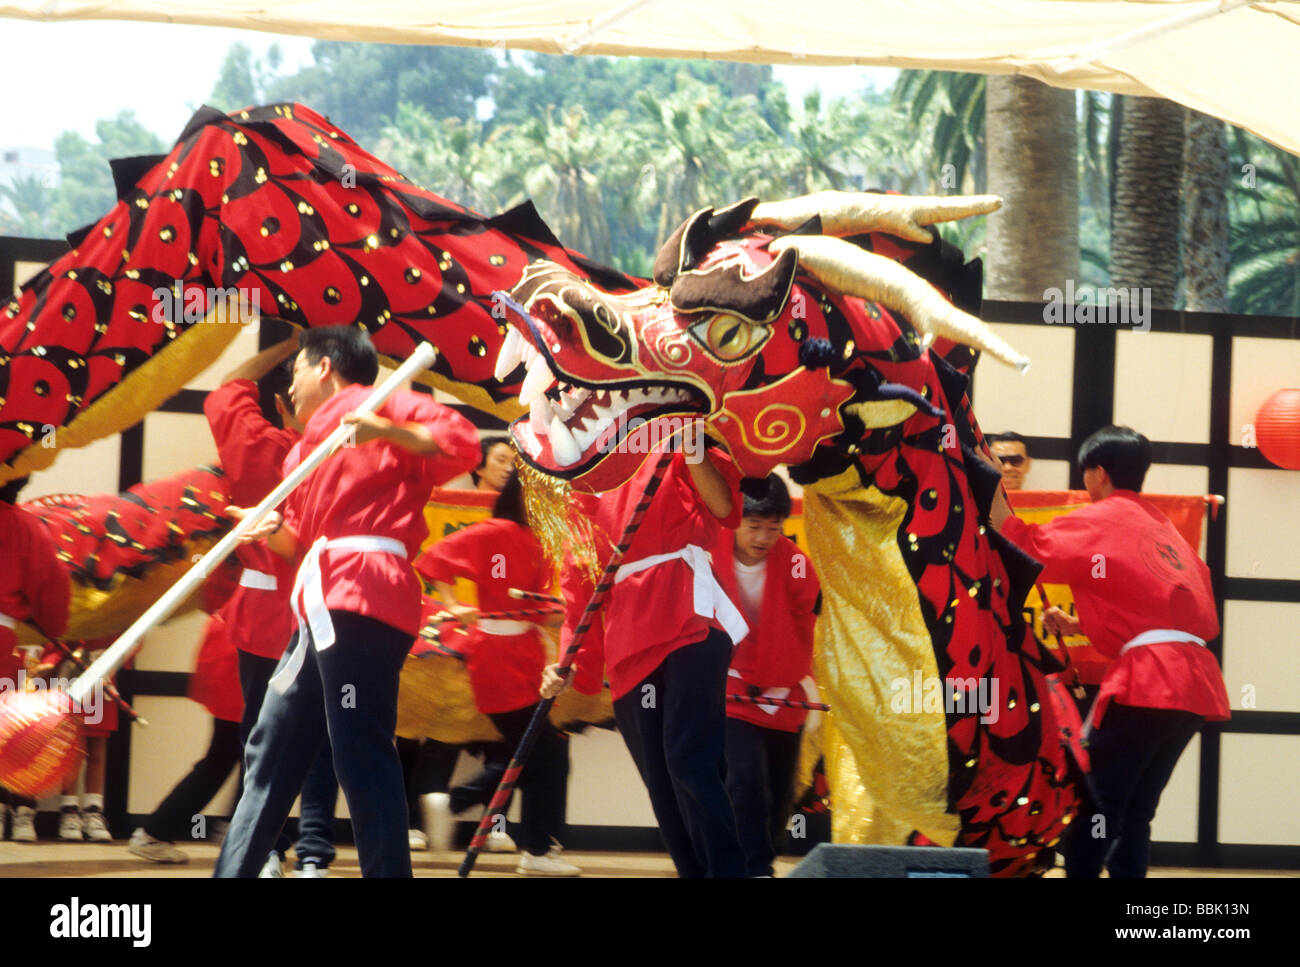 Chinese dragon dance festival asian oriental fair event culture cultural color costume Stock Photo